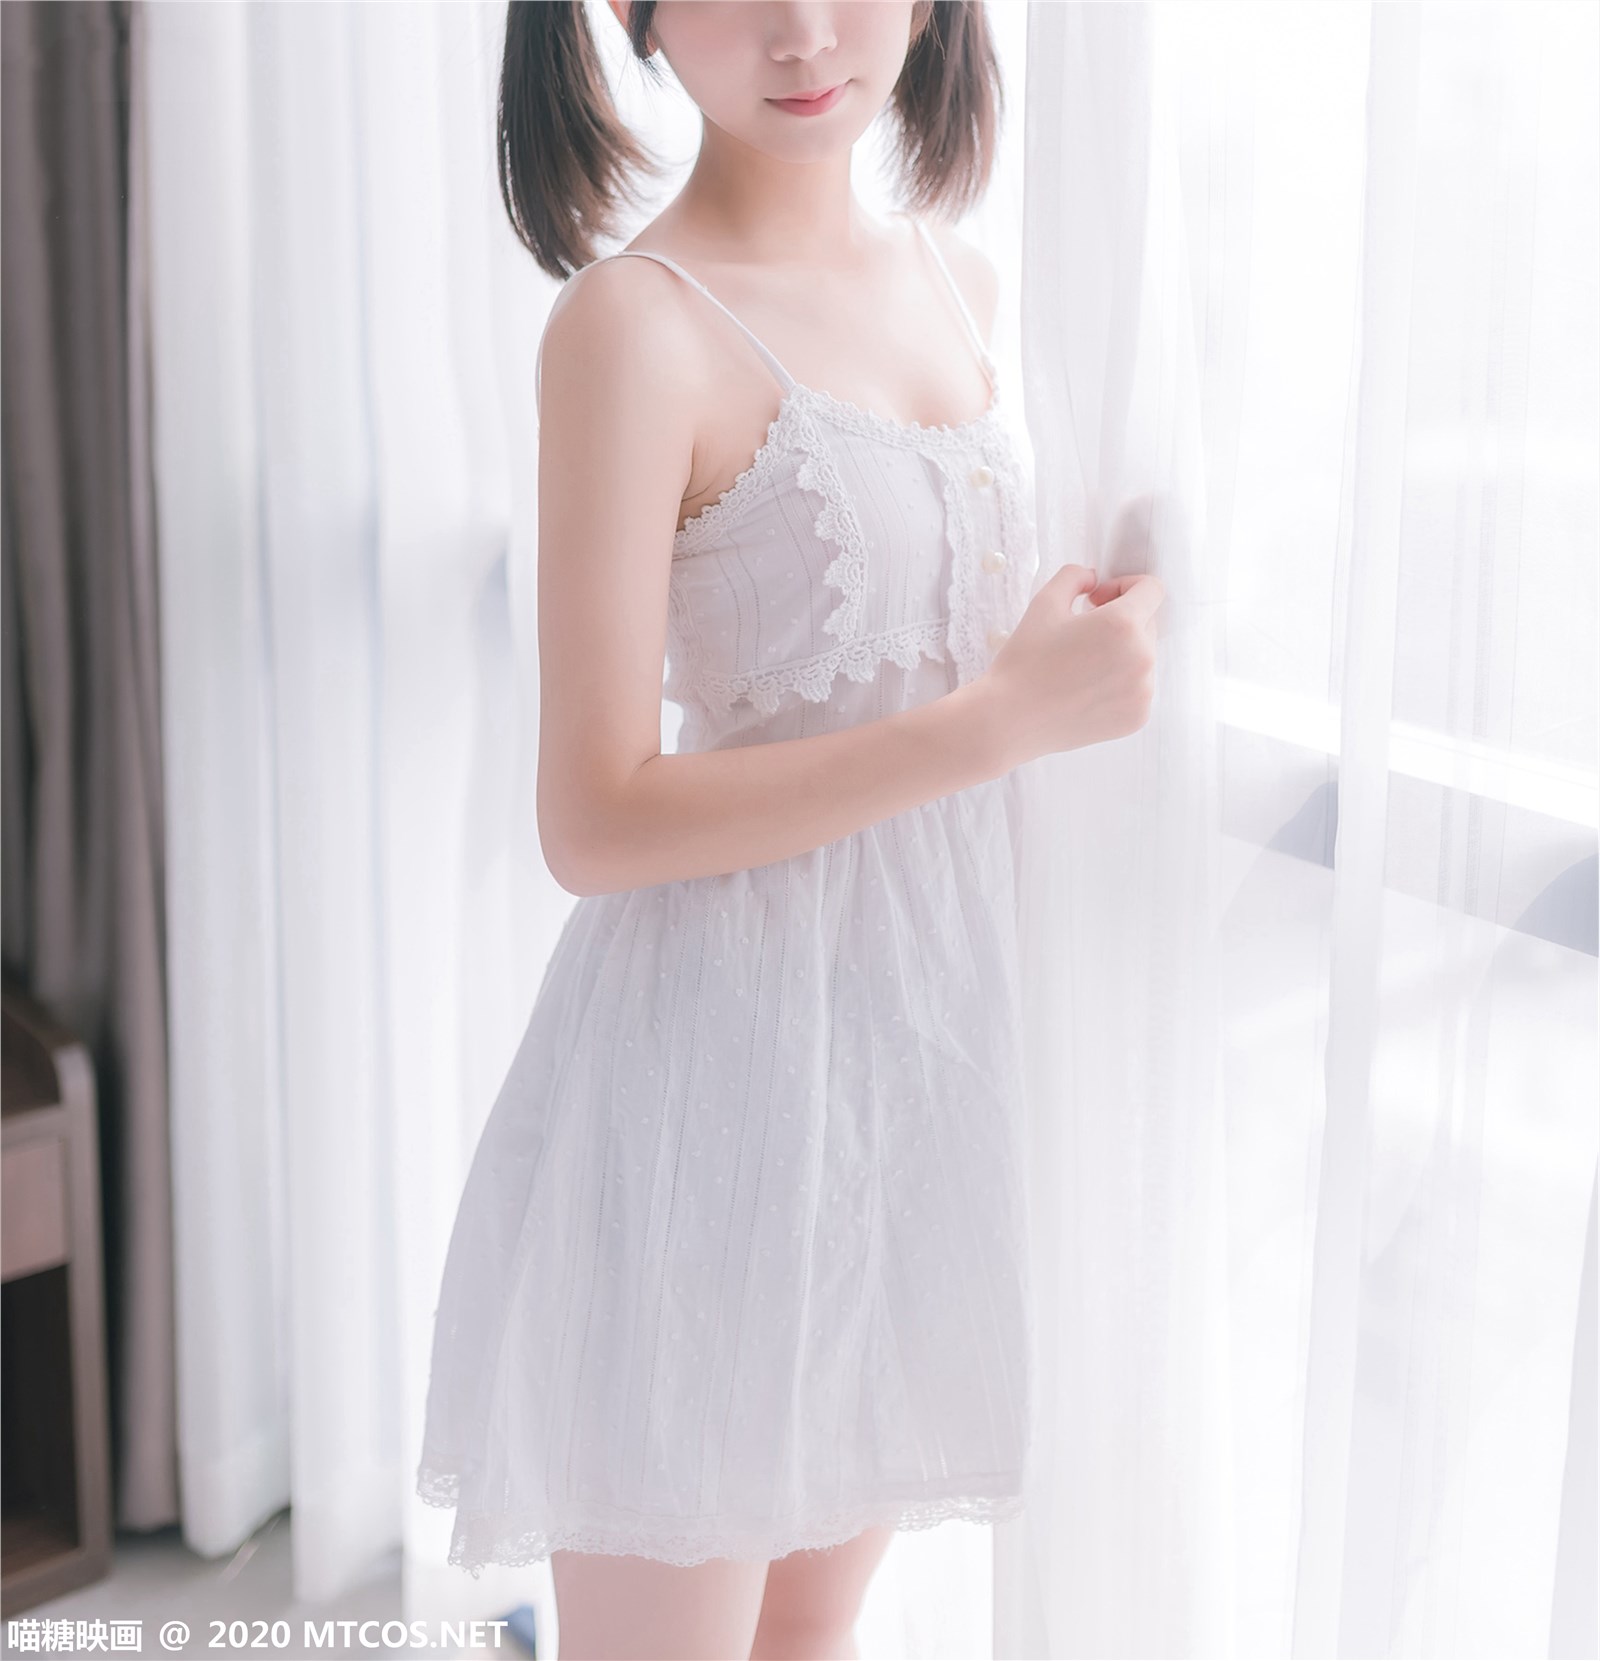 A girl in white dress(19)